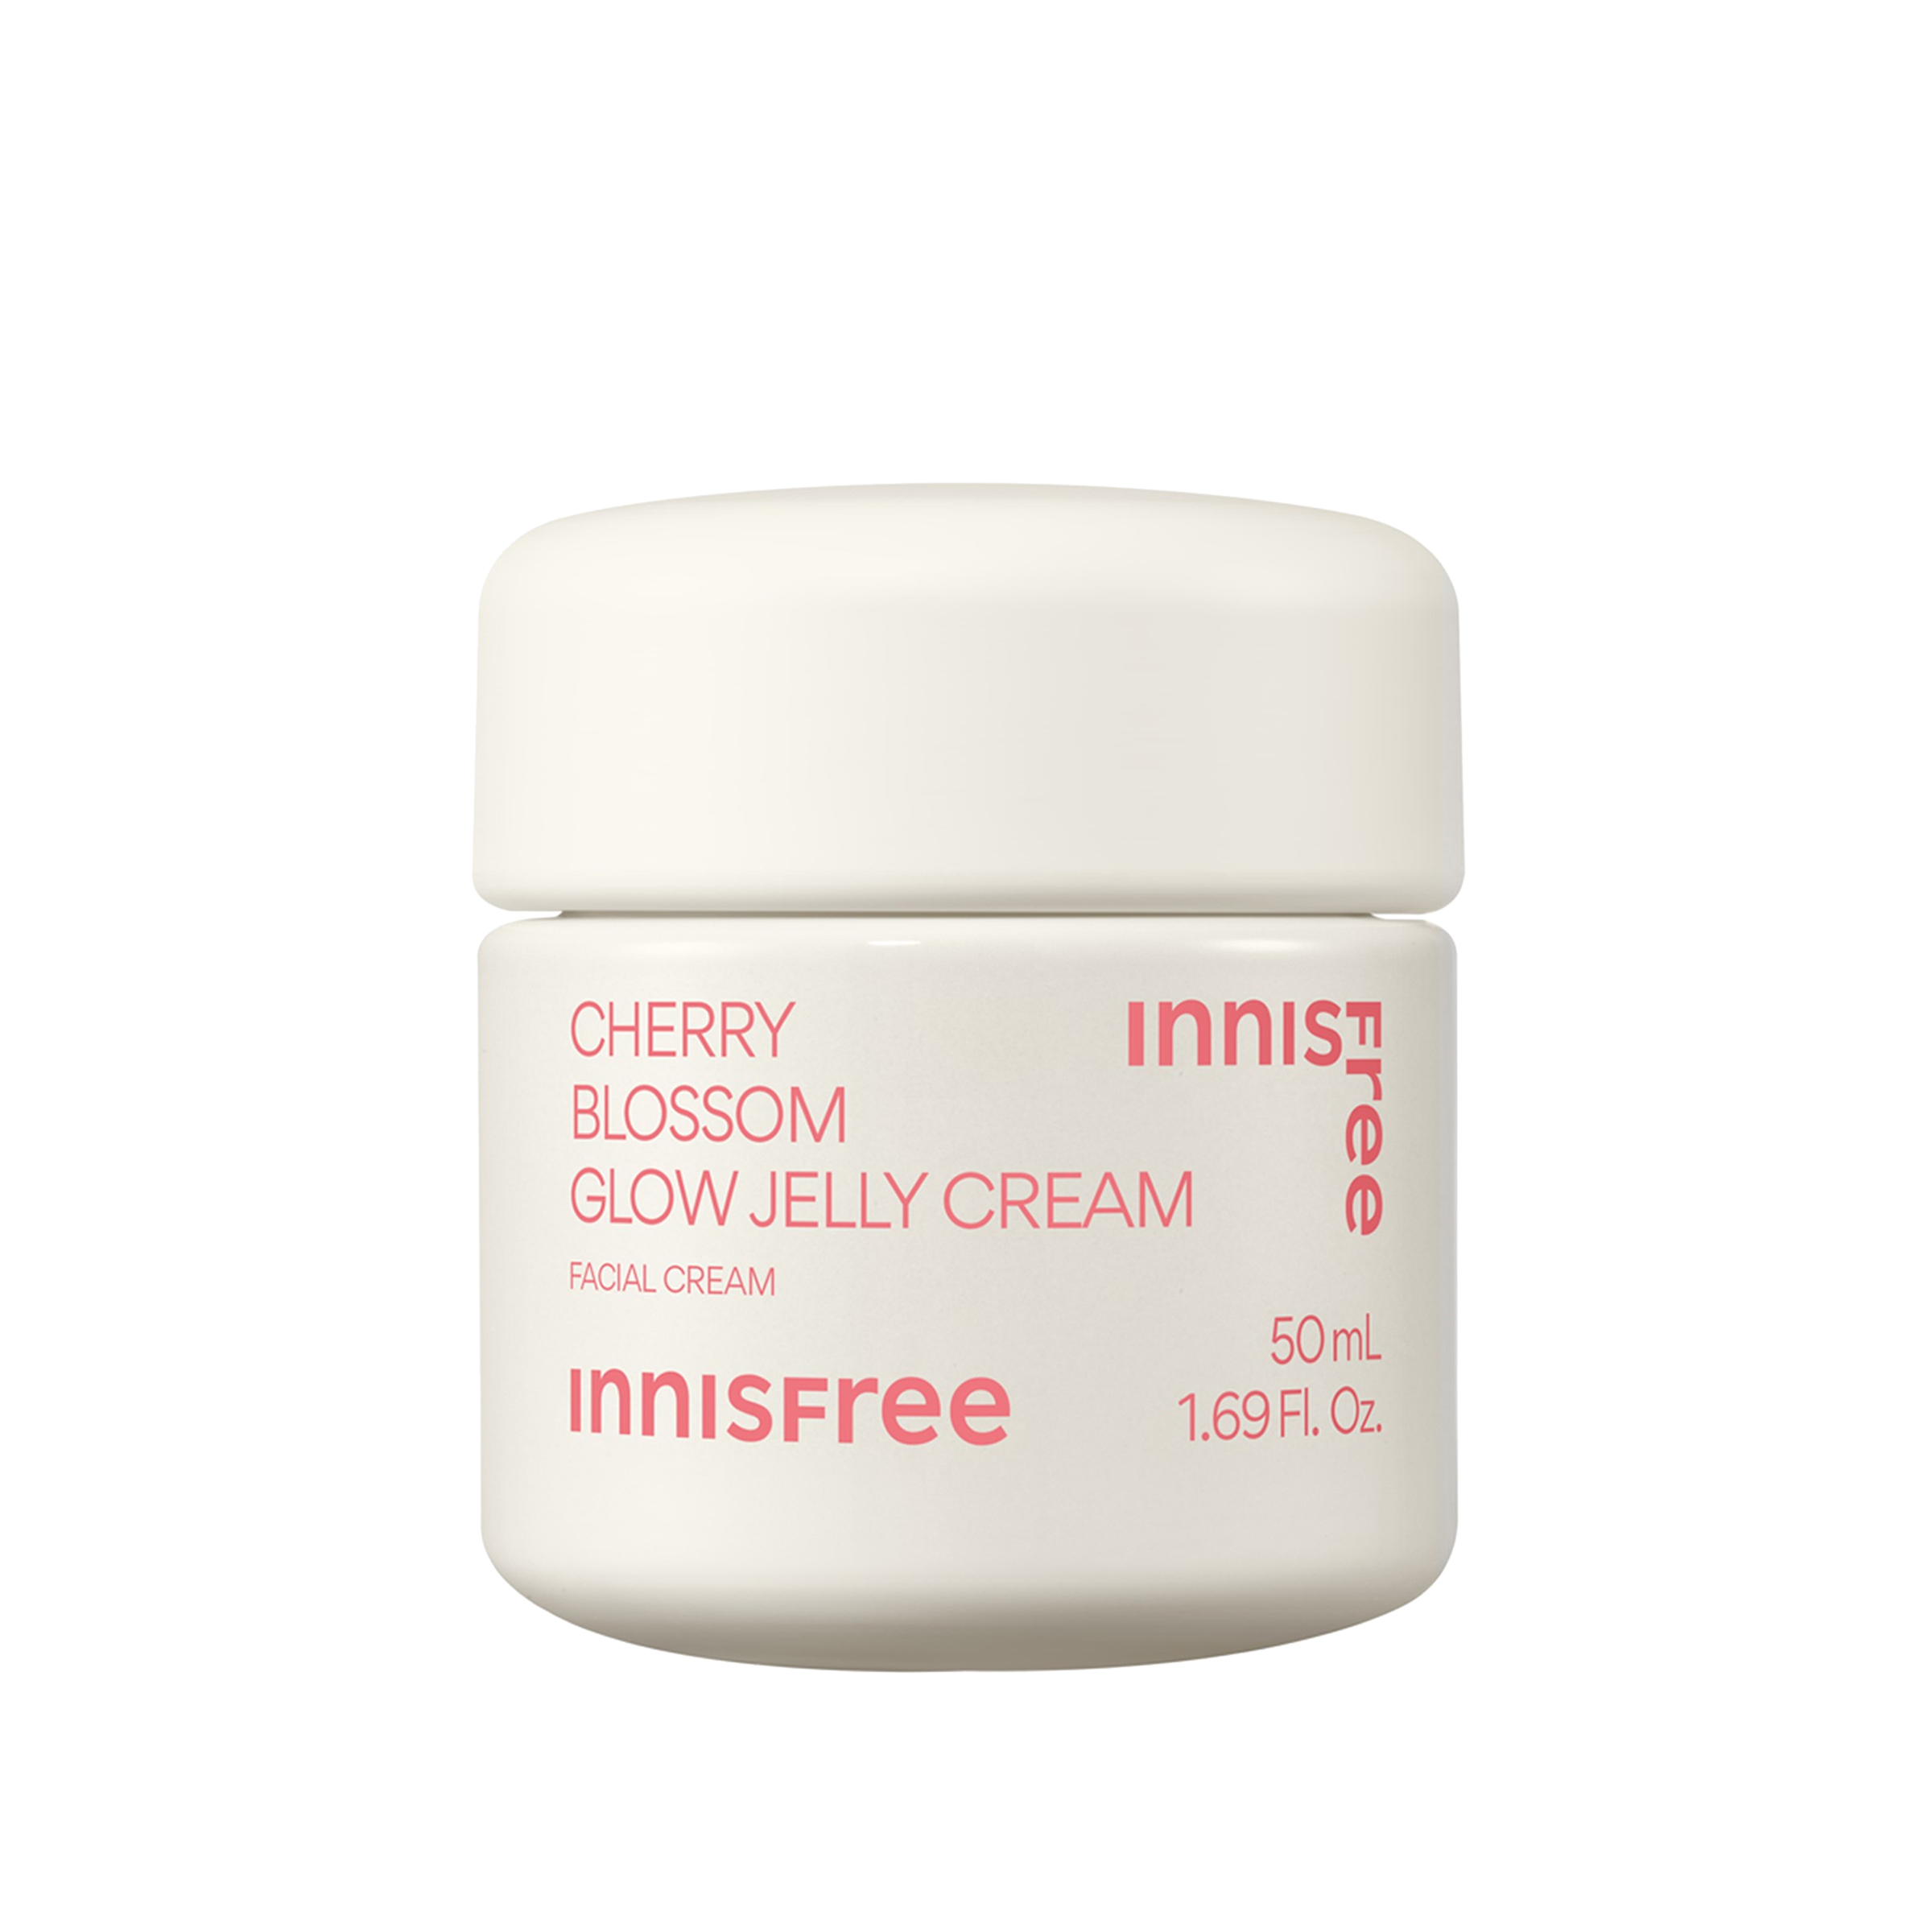 innisfree cherry blossom glow jelly cream